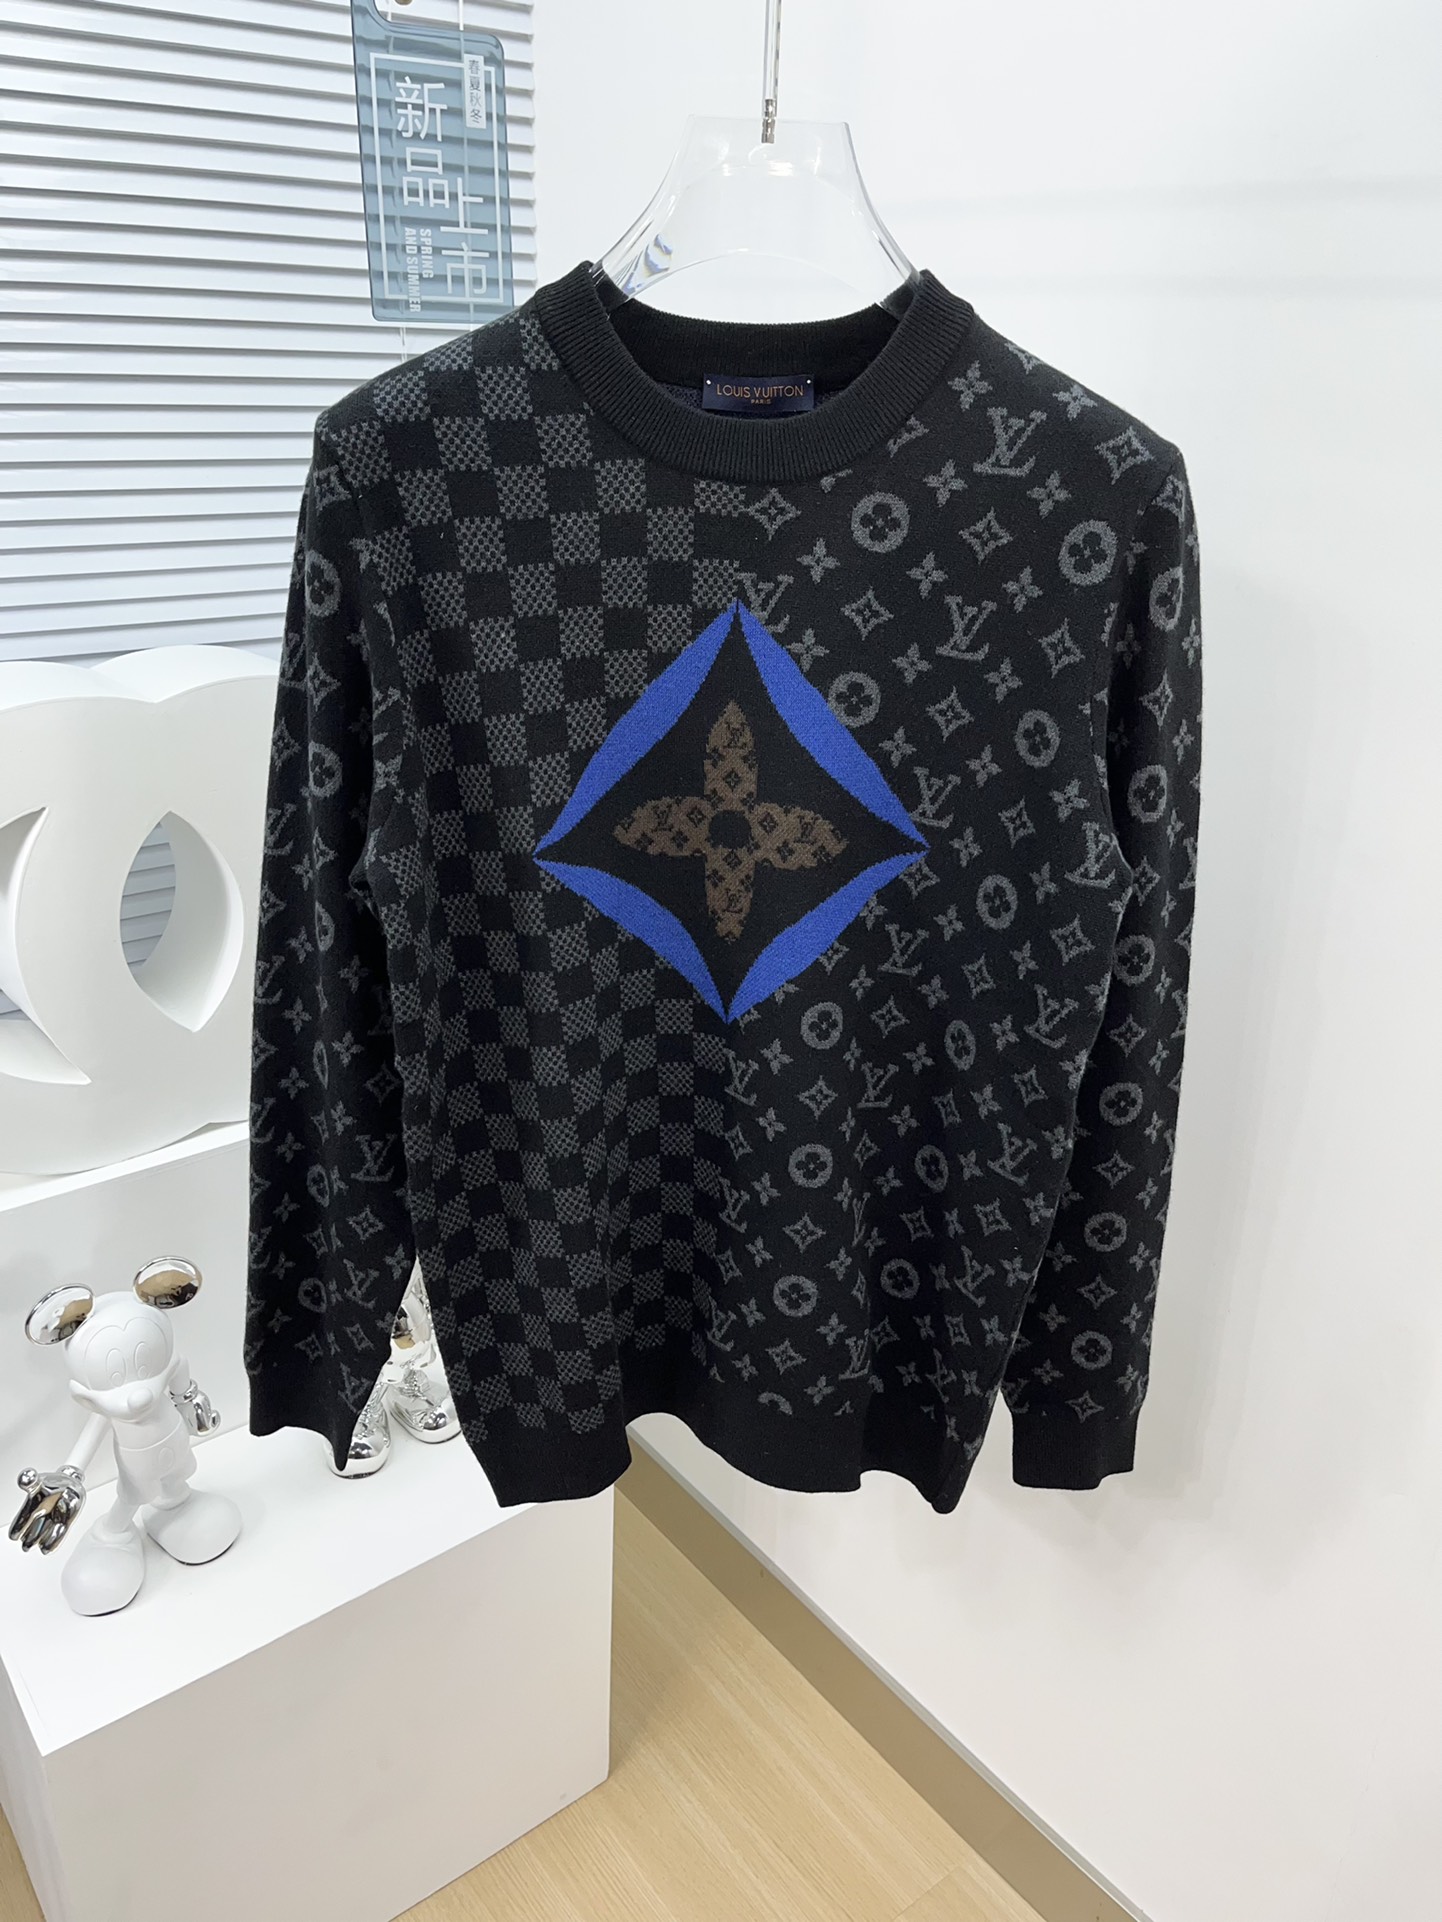 Louis Vuitton Clothing Sweatshirts Knitting Wool Fall/Winter Collection Fashion Casual